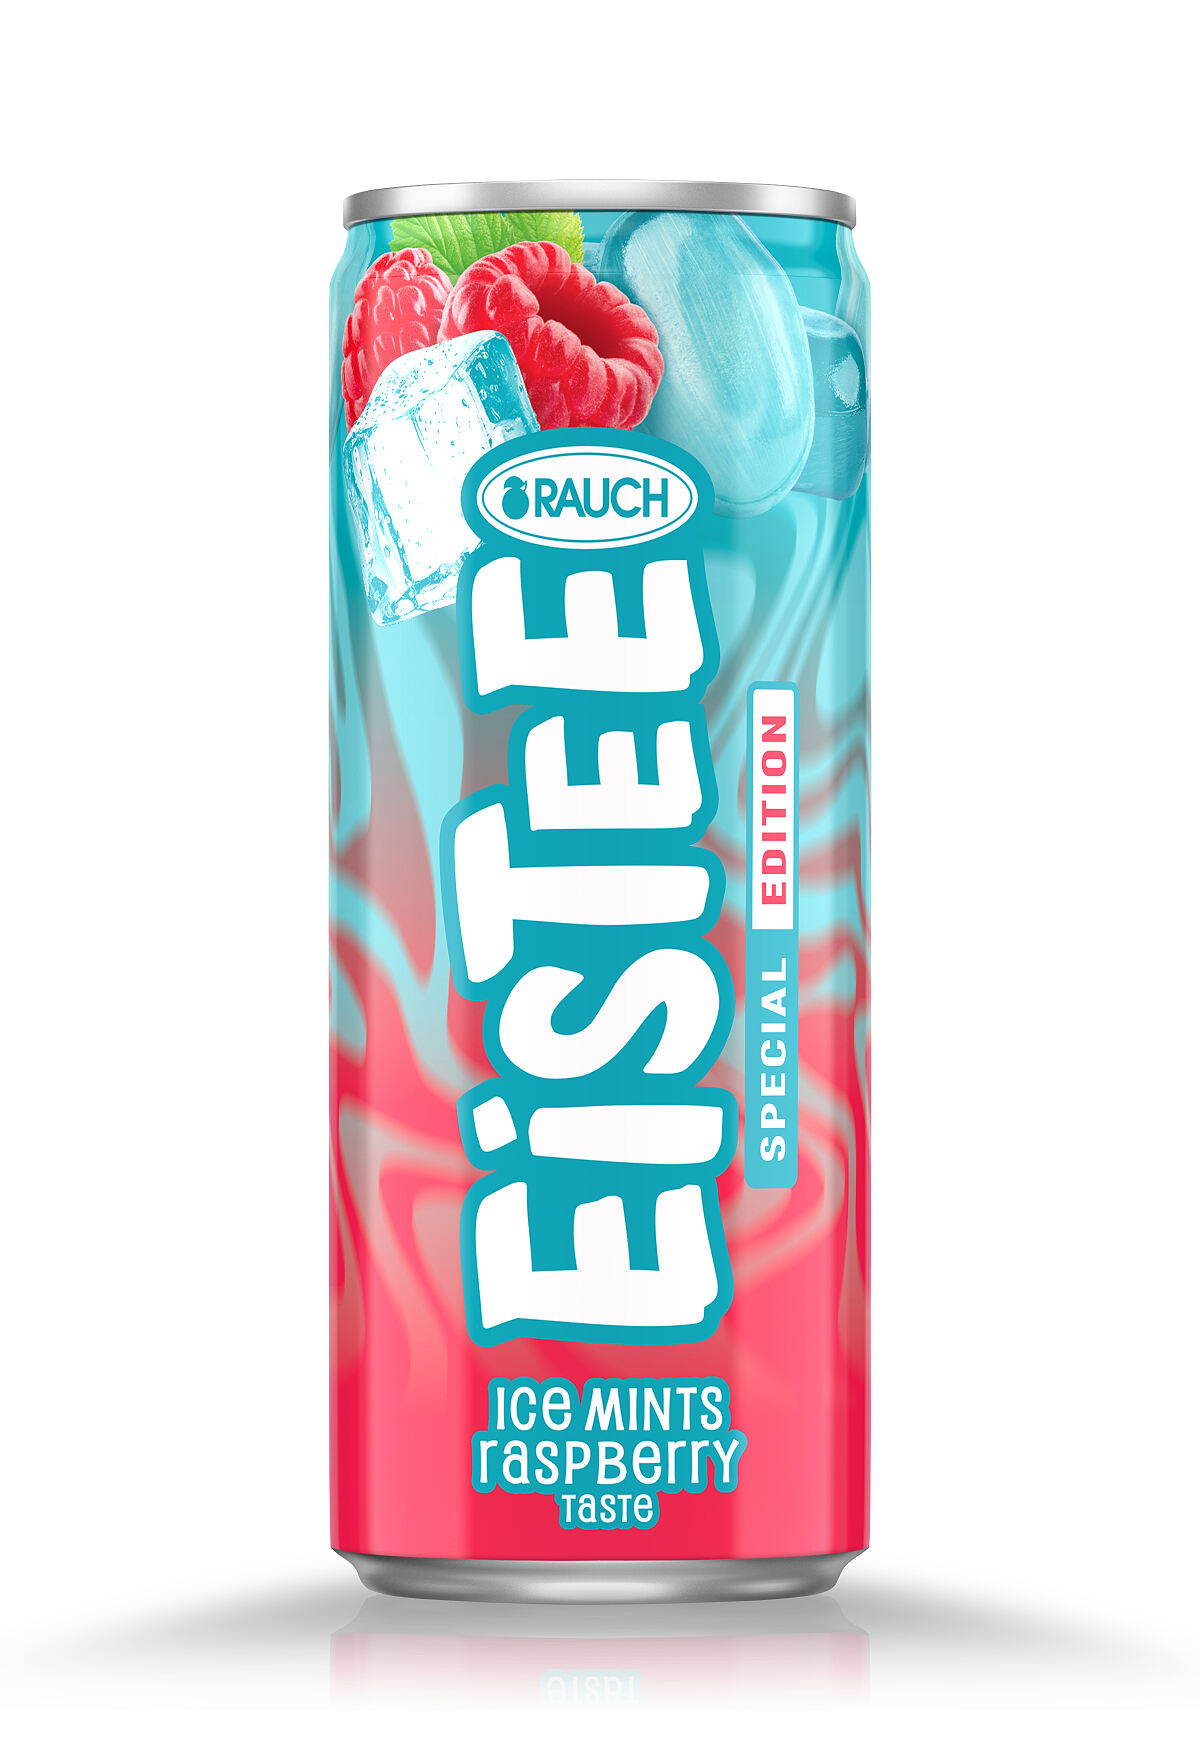 Rauch Eistee_Crazy Flavours_Ice Mints Raspberry_EUR 1,05_©Rauch Eistee